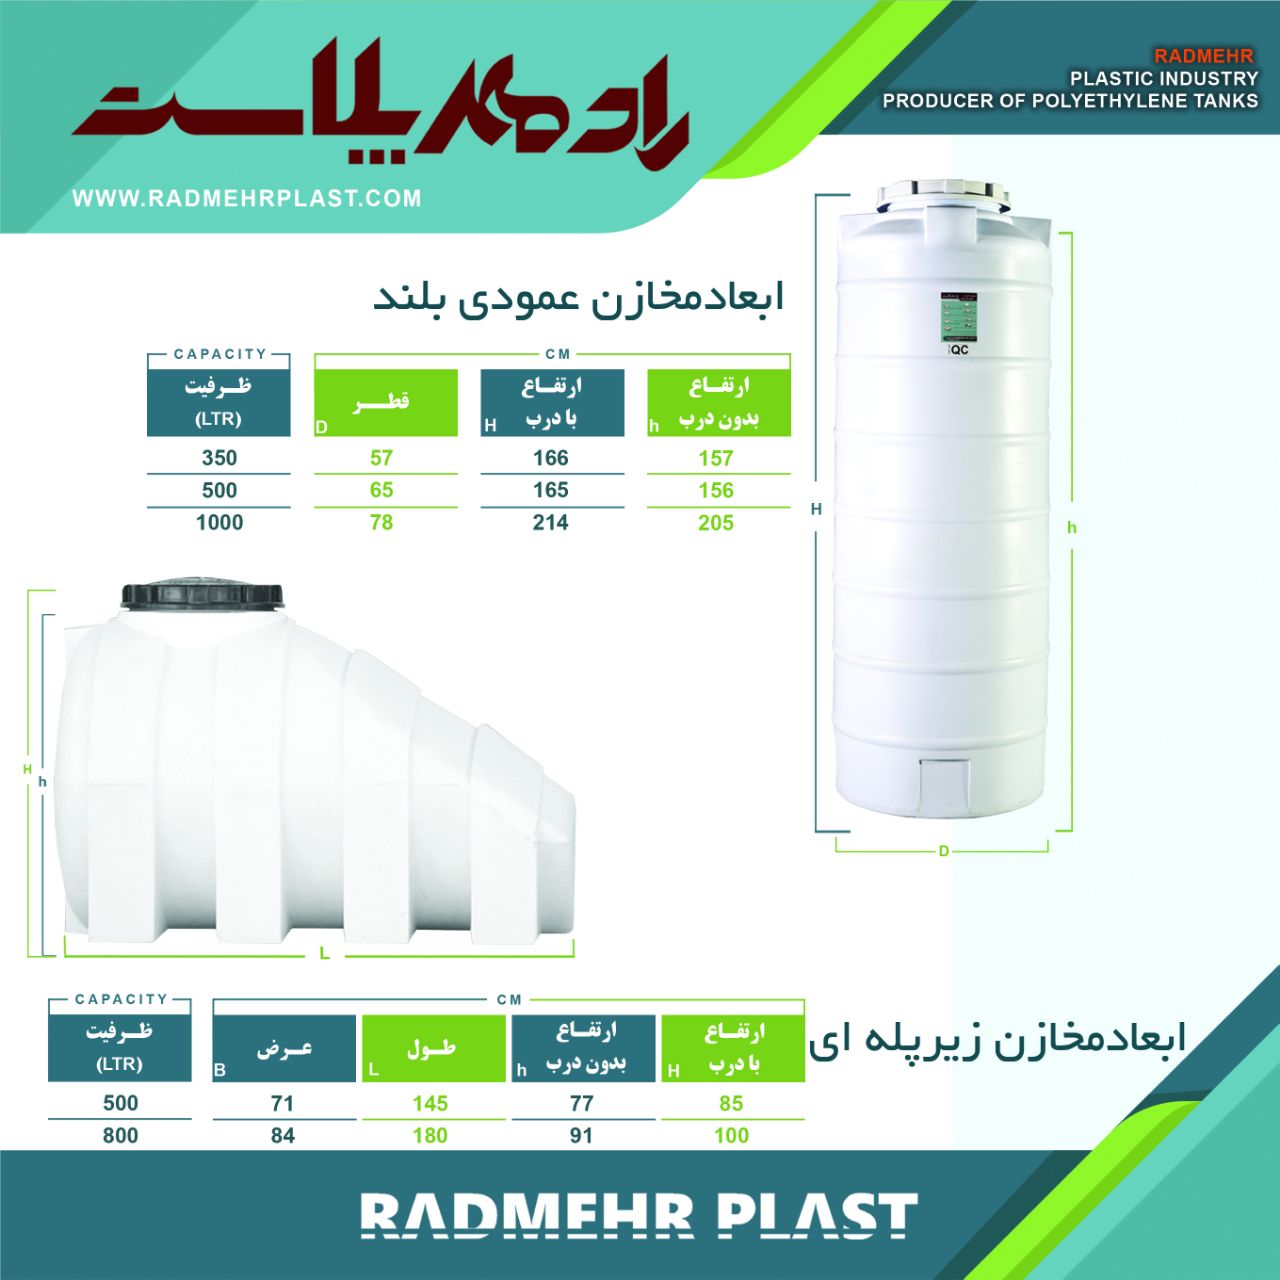 High strength and durability of Radmehrplast tanks